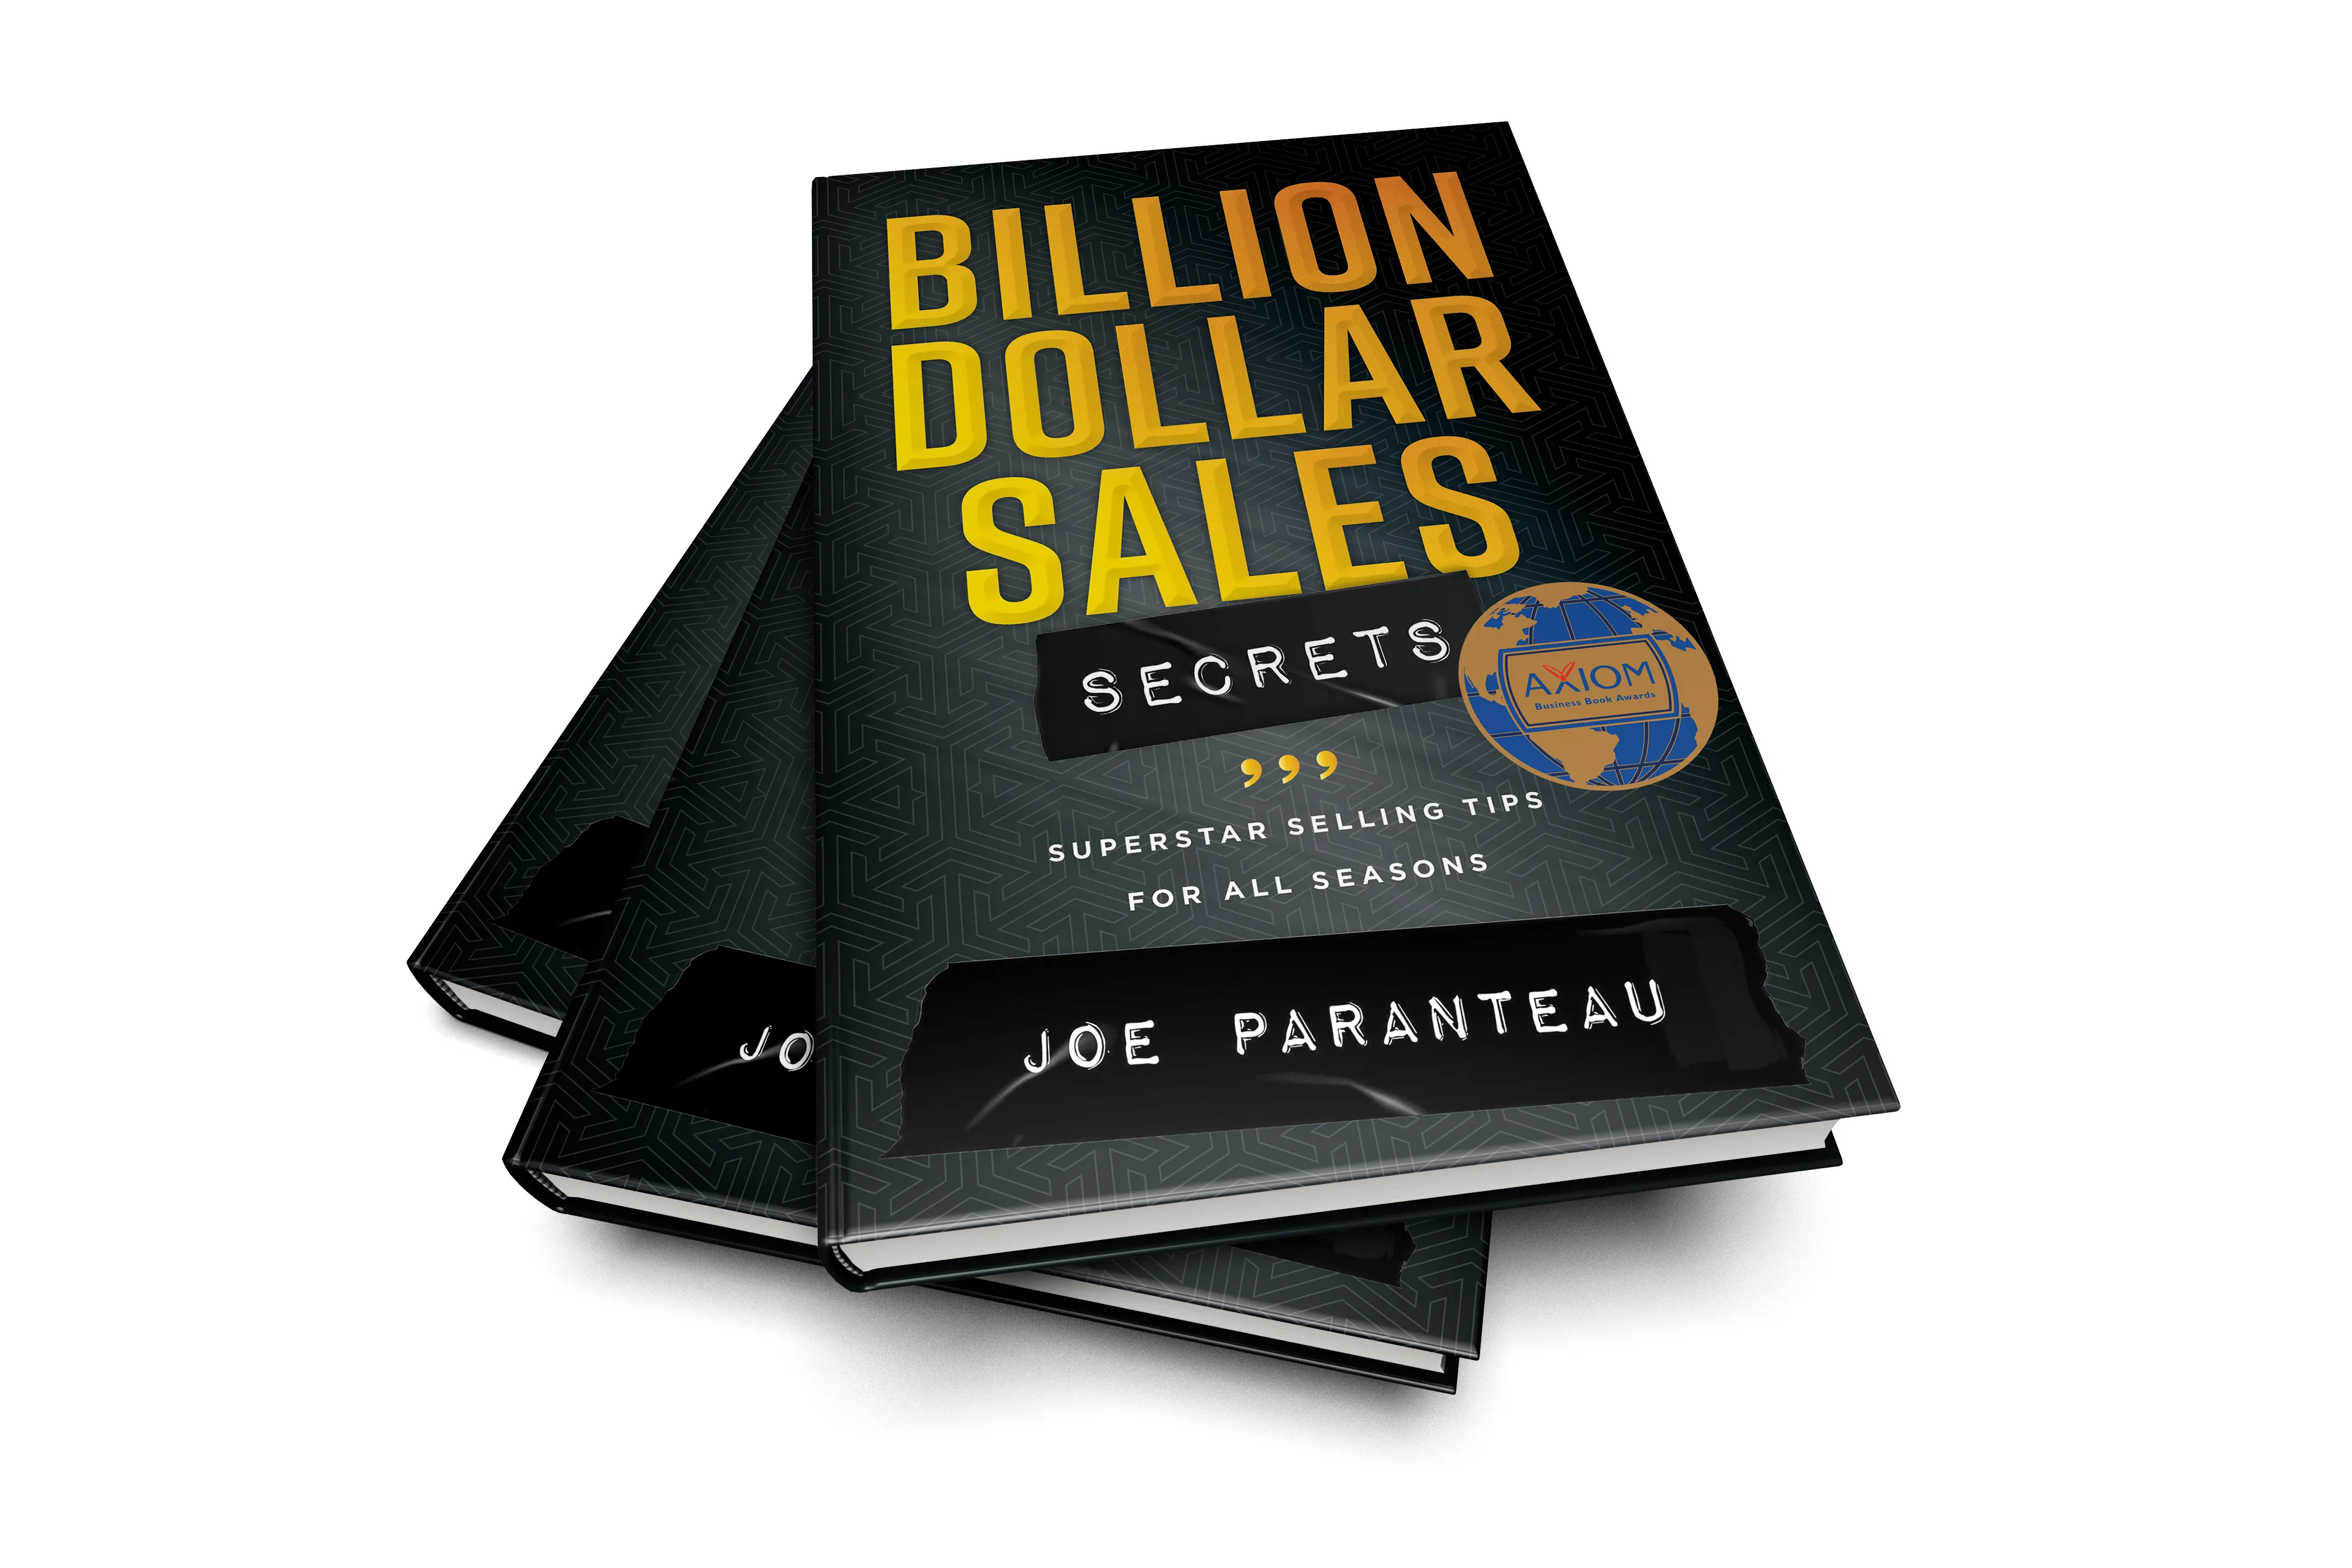 Billion Dollar Sales Secrets by Joe Paranteau.  Hardback book with spine showing.